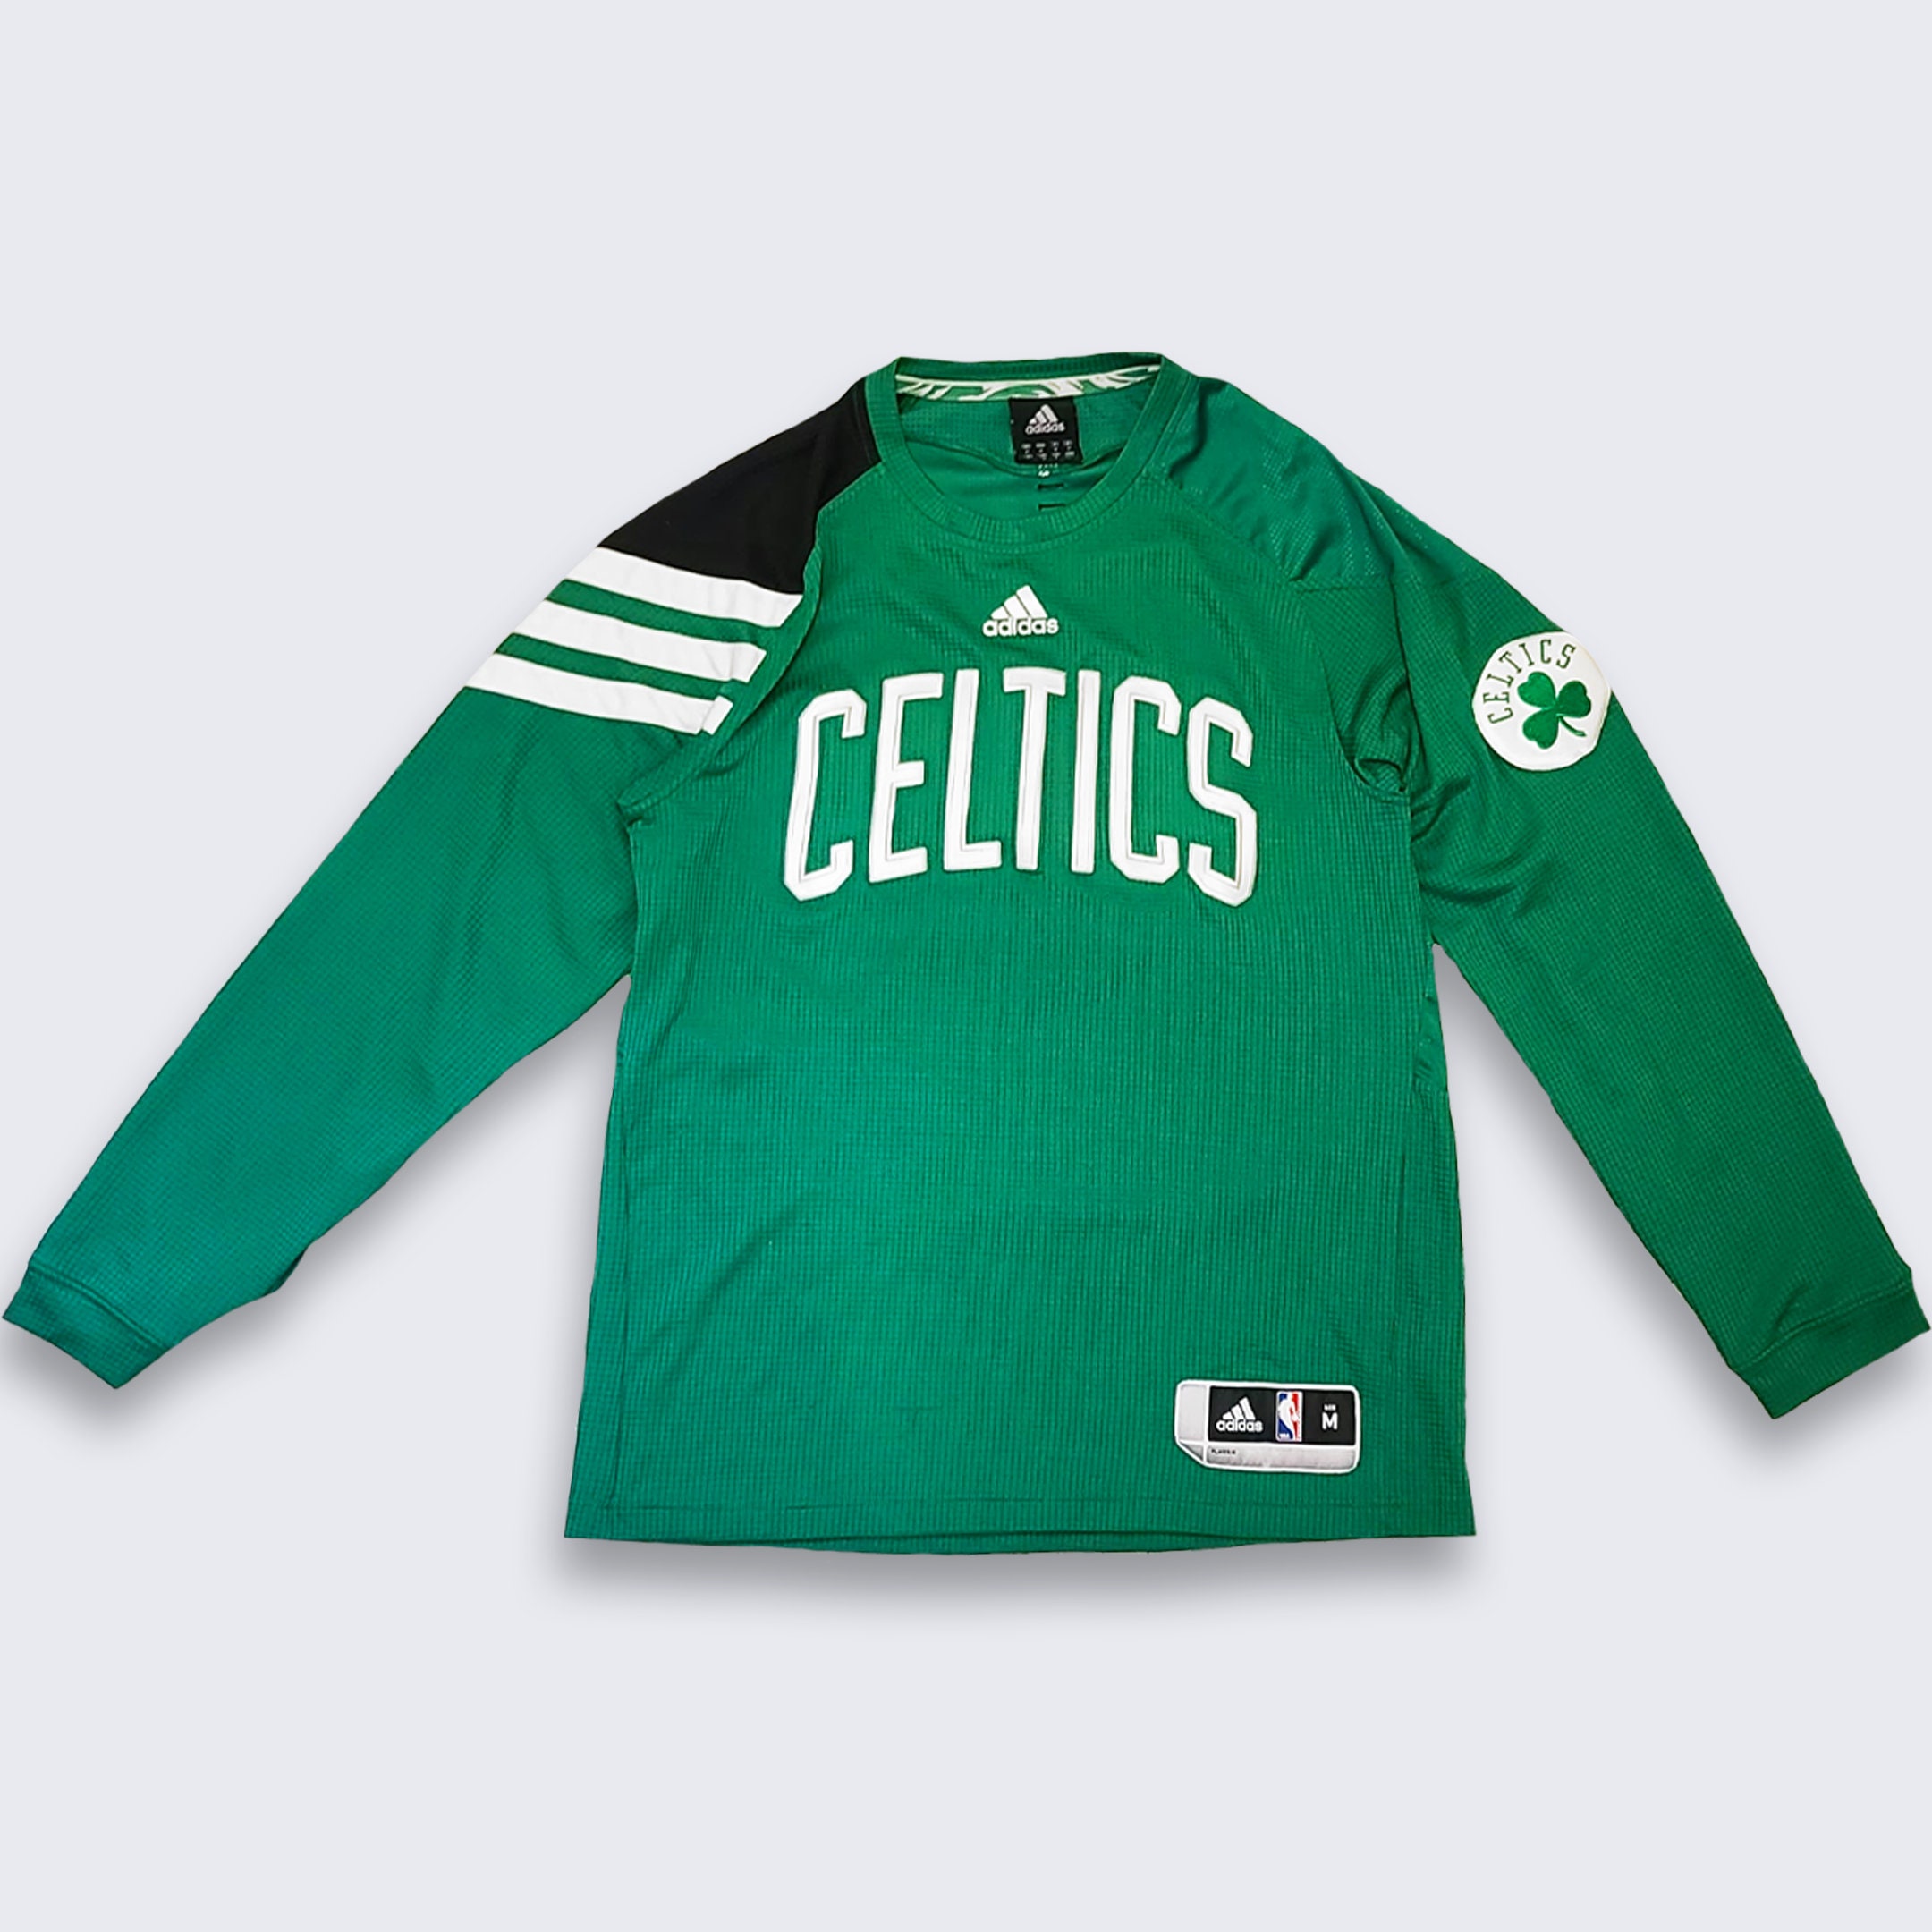 Celtics Adidas Calentar Jersey Jersey - Etsy España